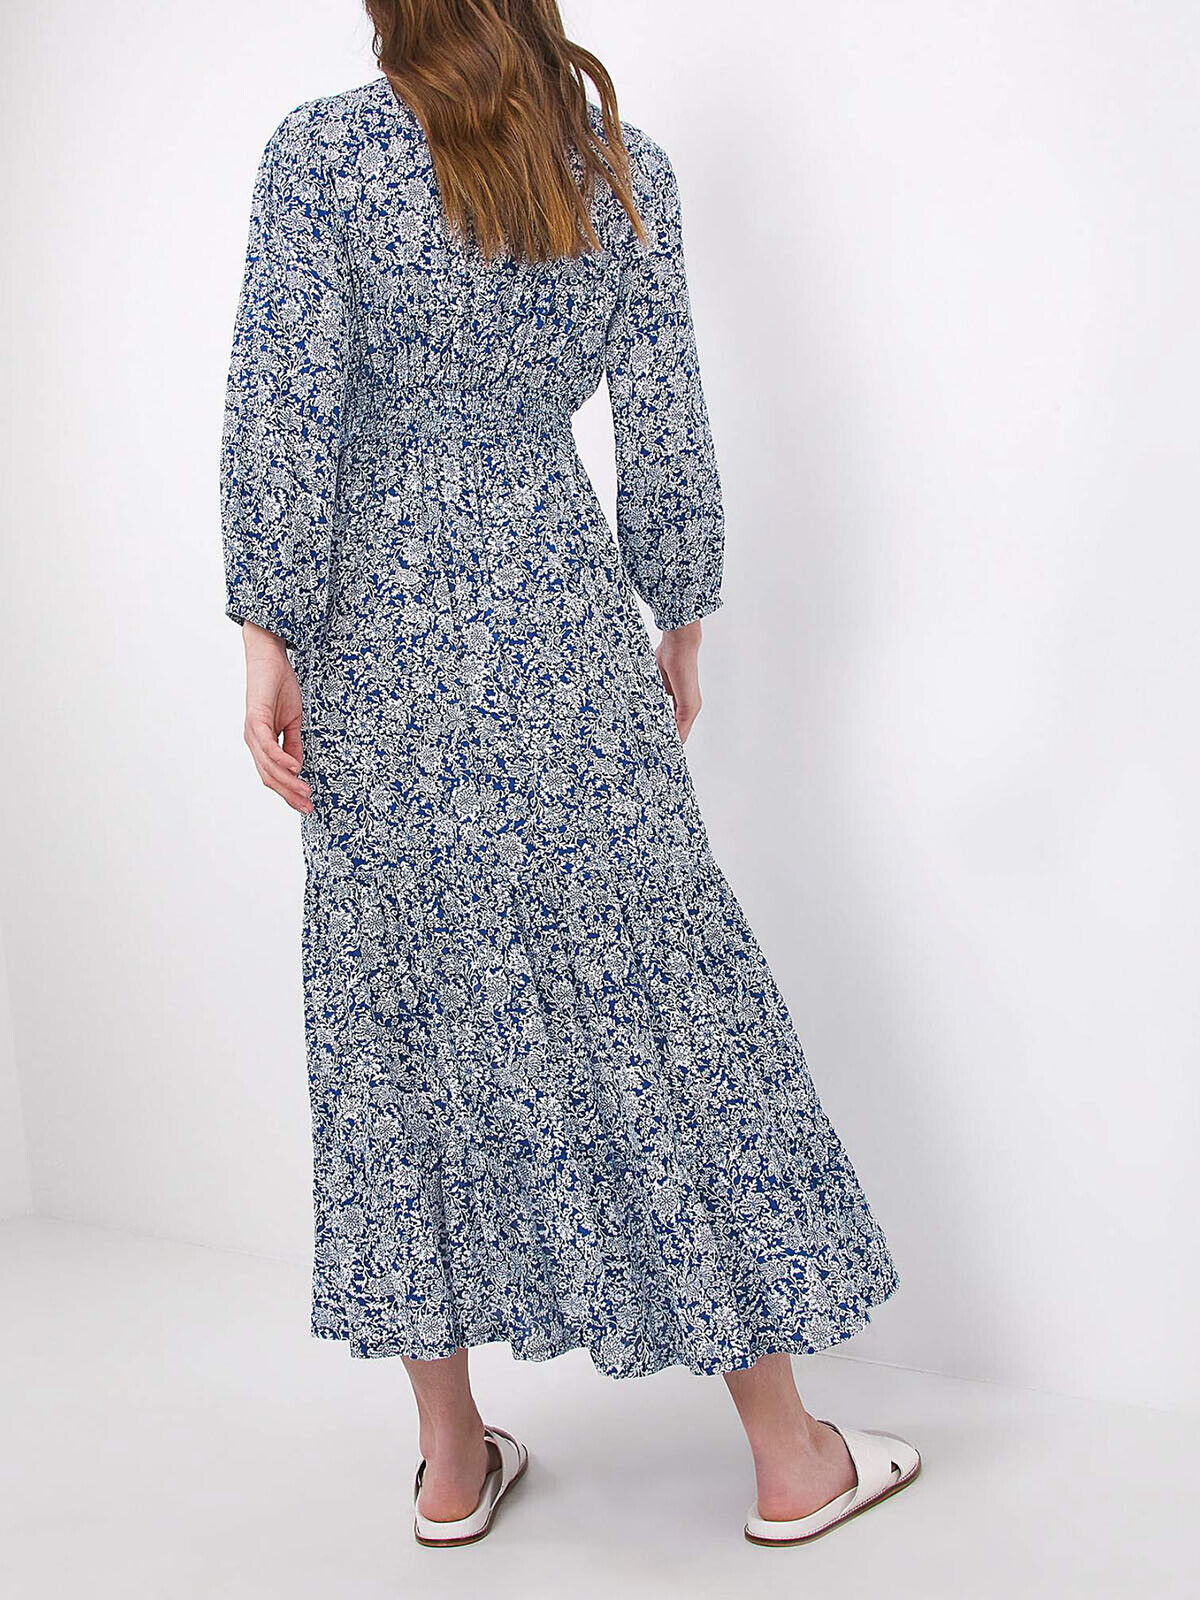 Julipa Blue Crinkle Wrap Dress in Sizes 18 or 26 RRP £48